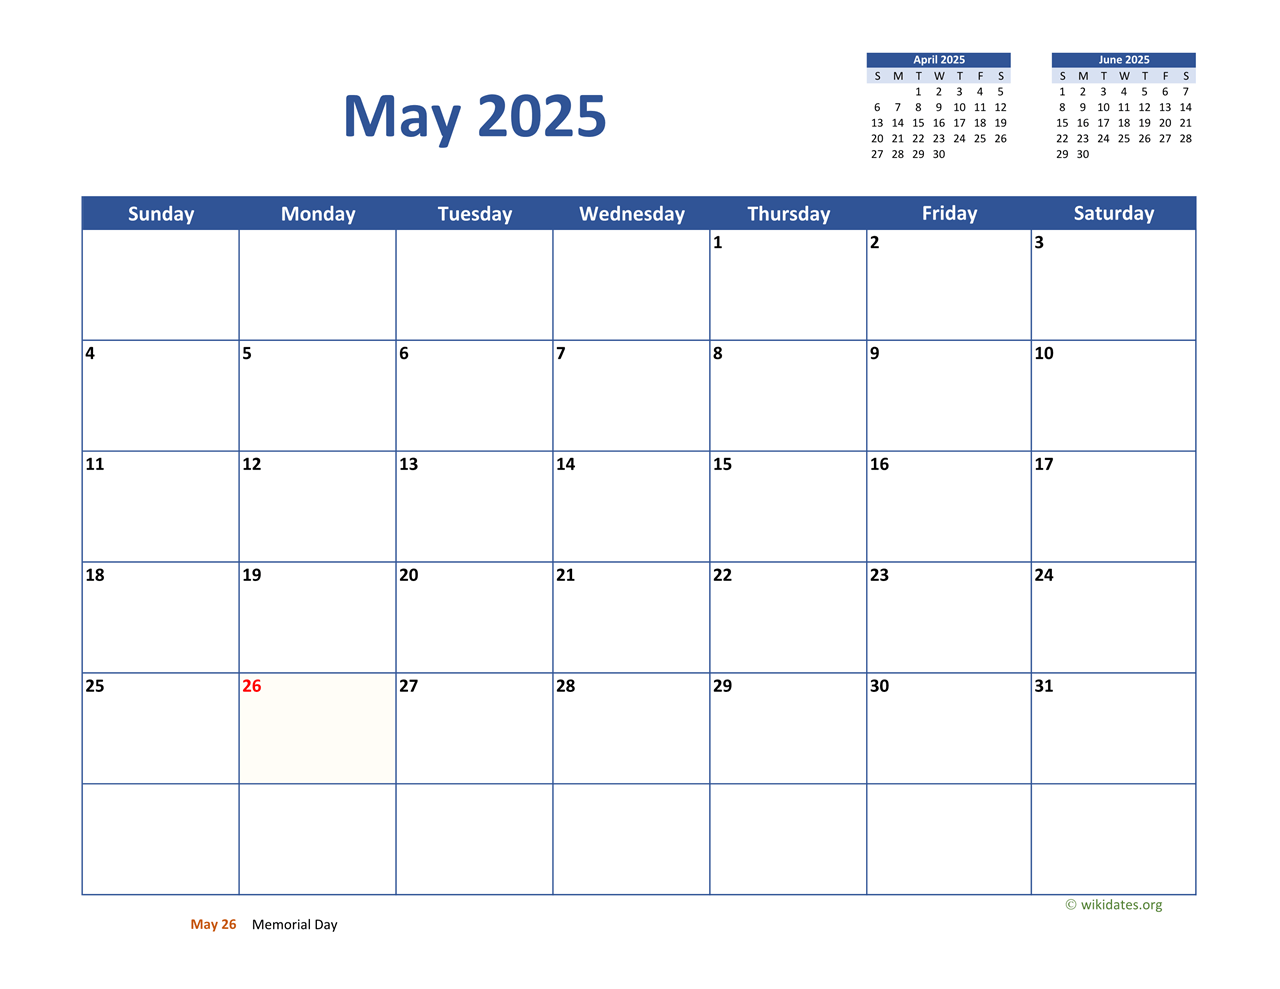 may-2025-calendar-classic-wikidates